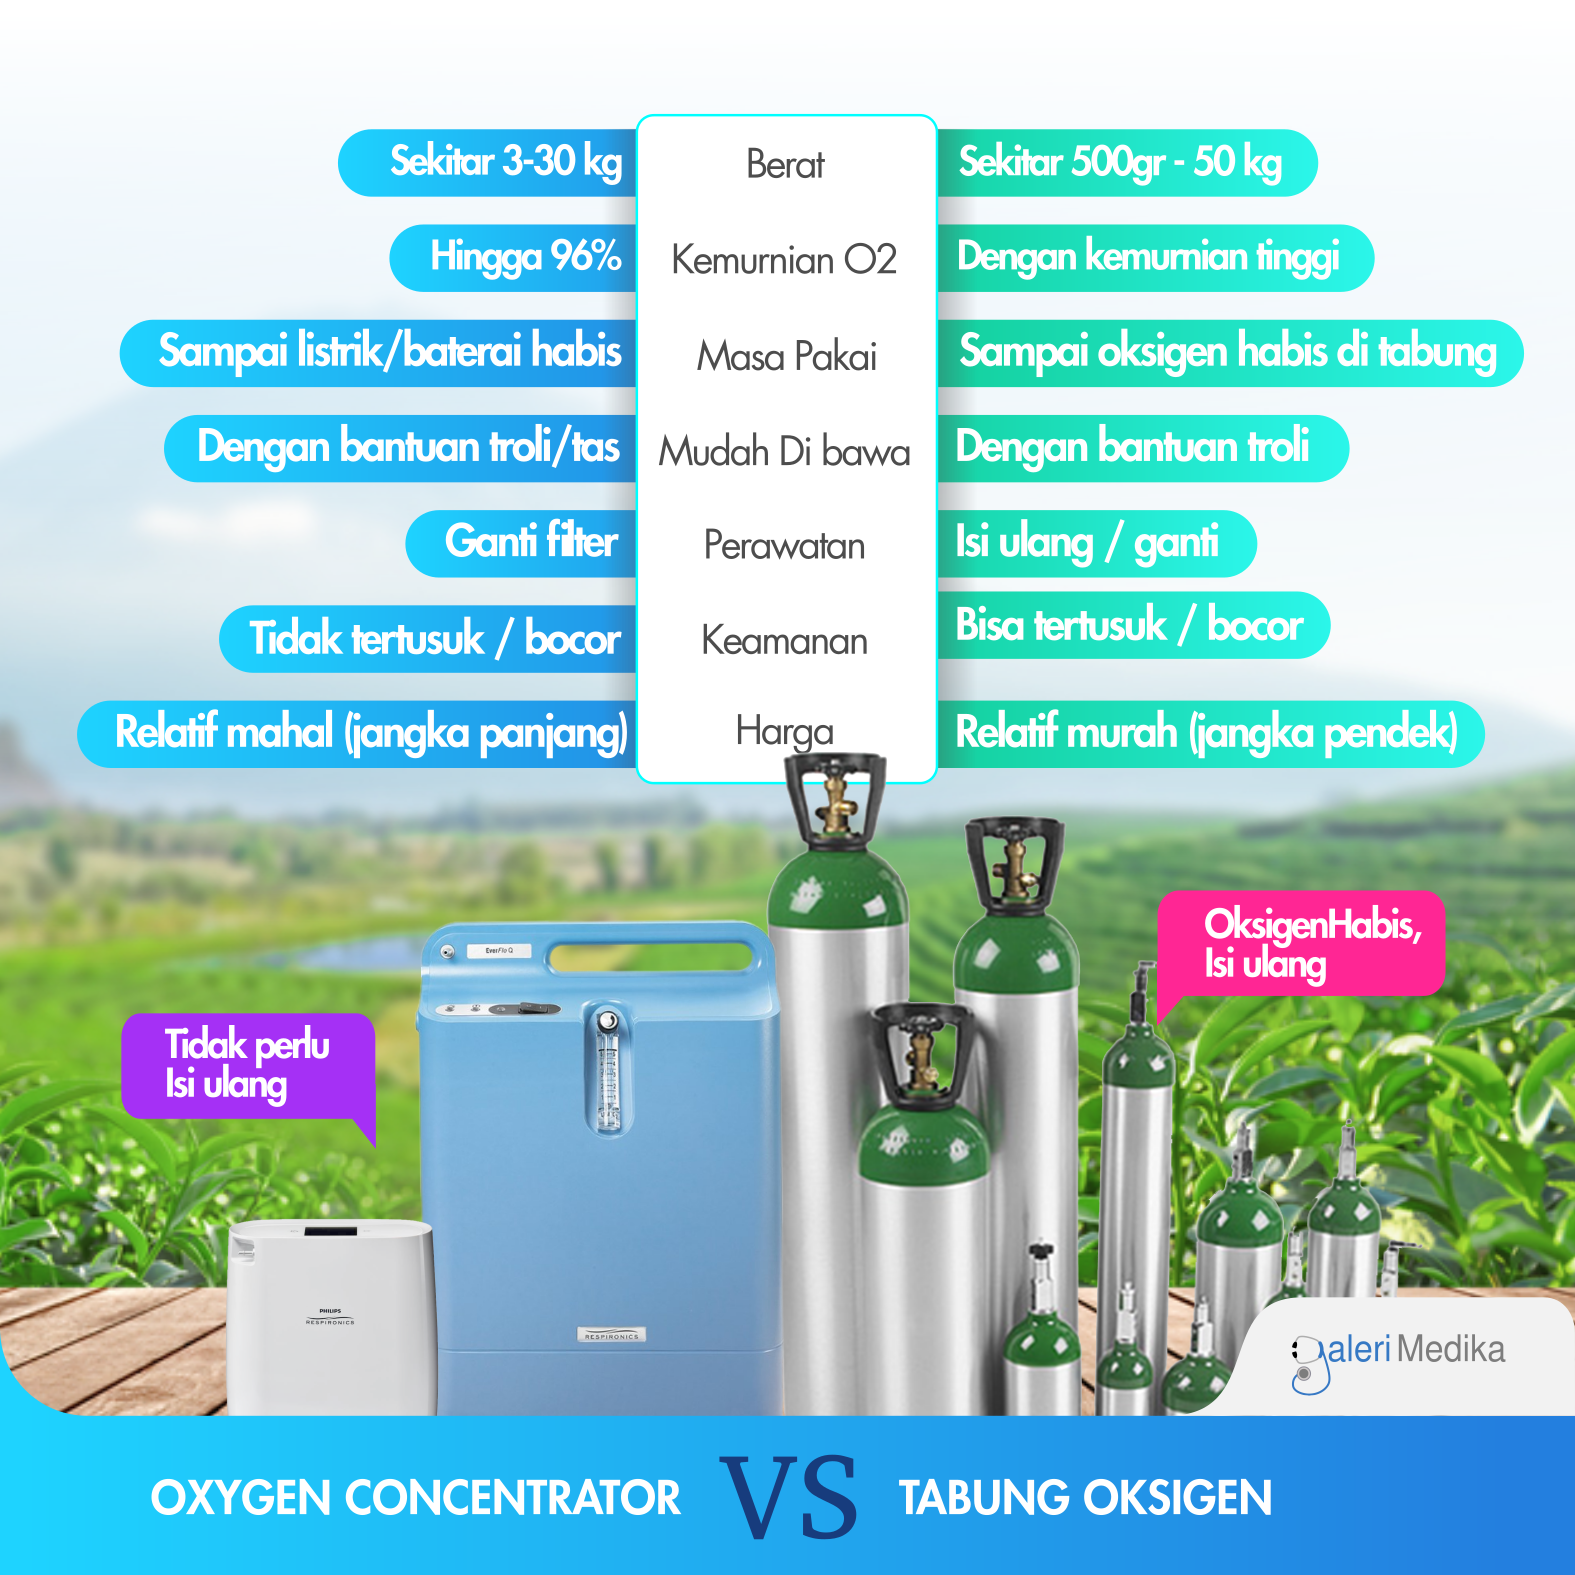 Oxygen Concentrator VS Tabung Oksigen